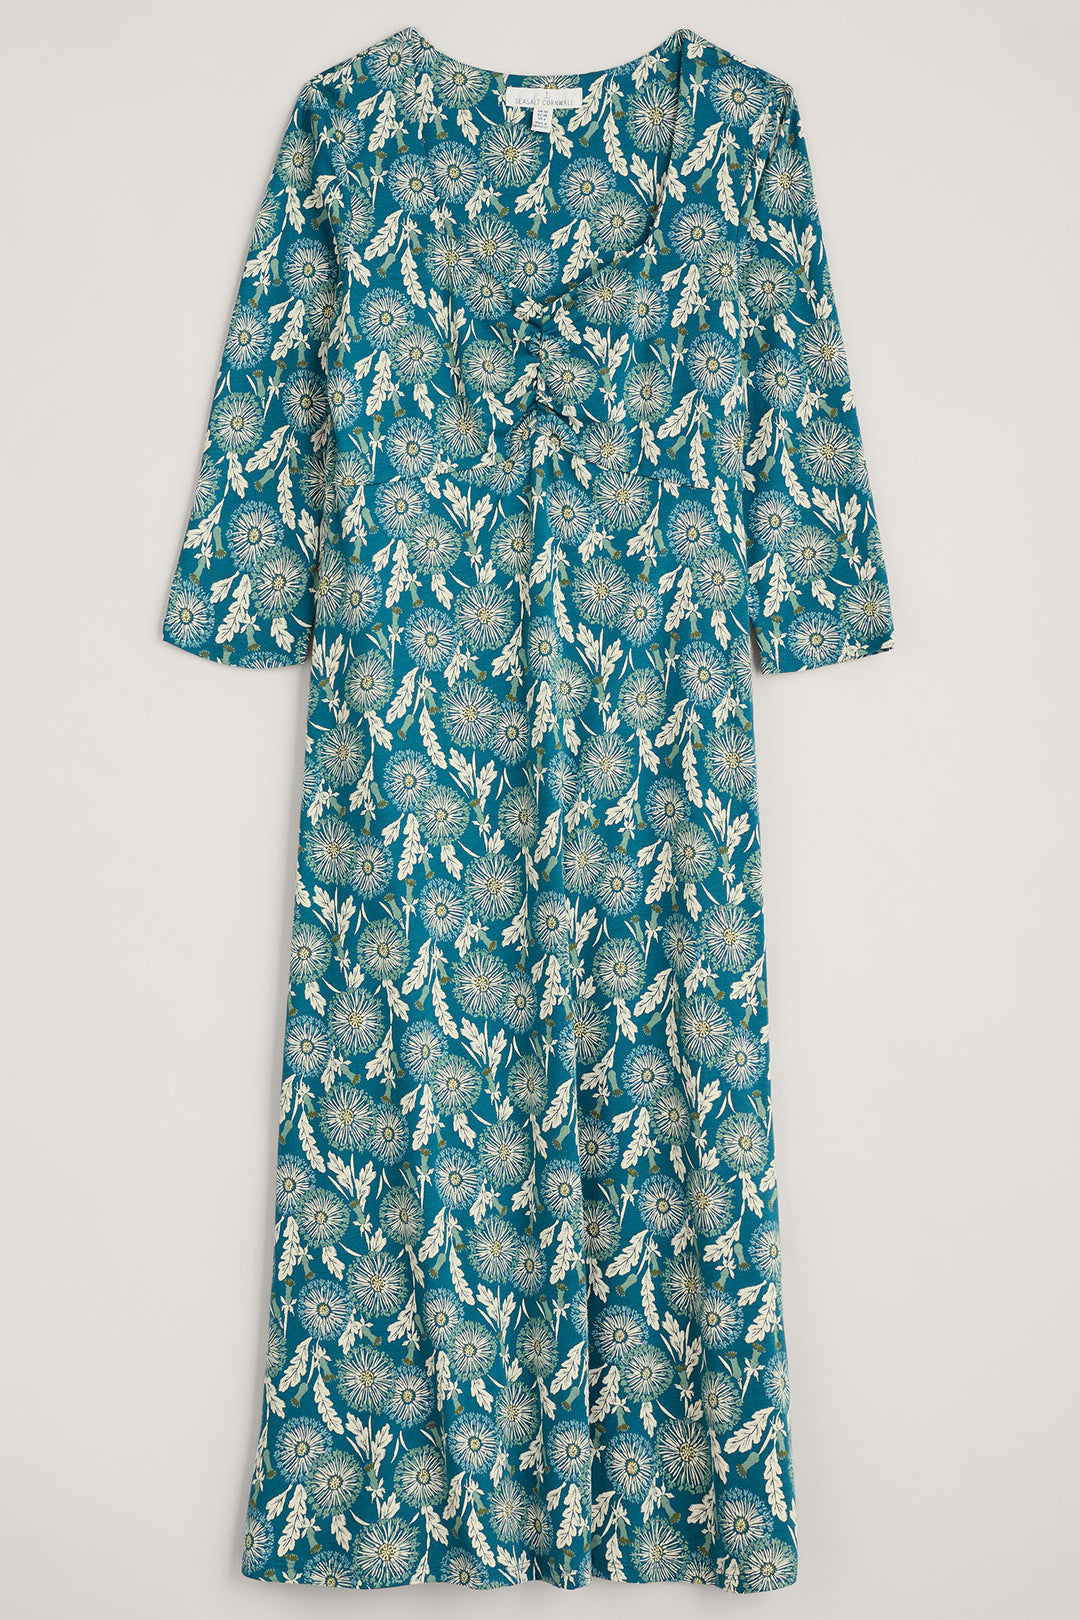 Seasalt Secret Cove Green Dandelion Seed Seaway 3/4 Sleeve Dress - Shirley Allum Boutique